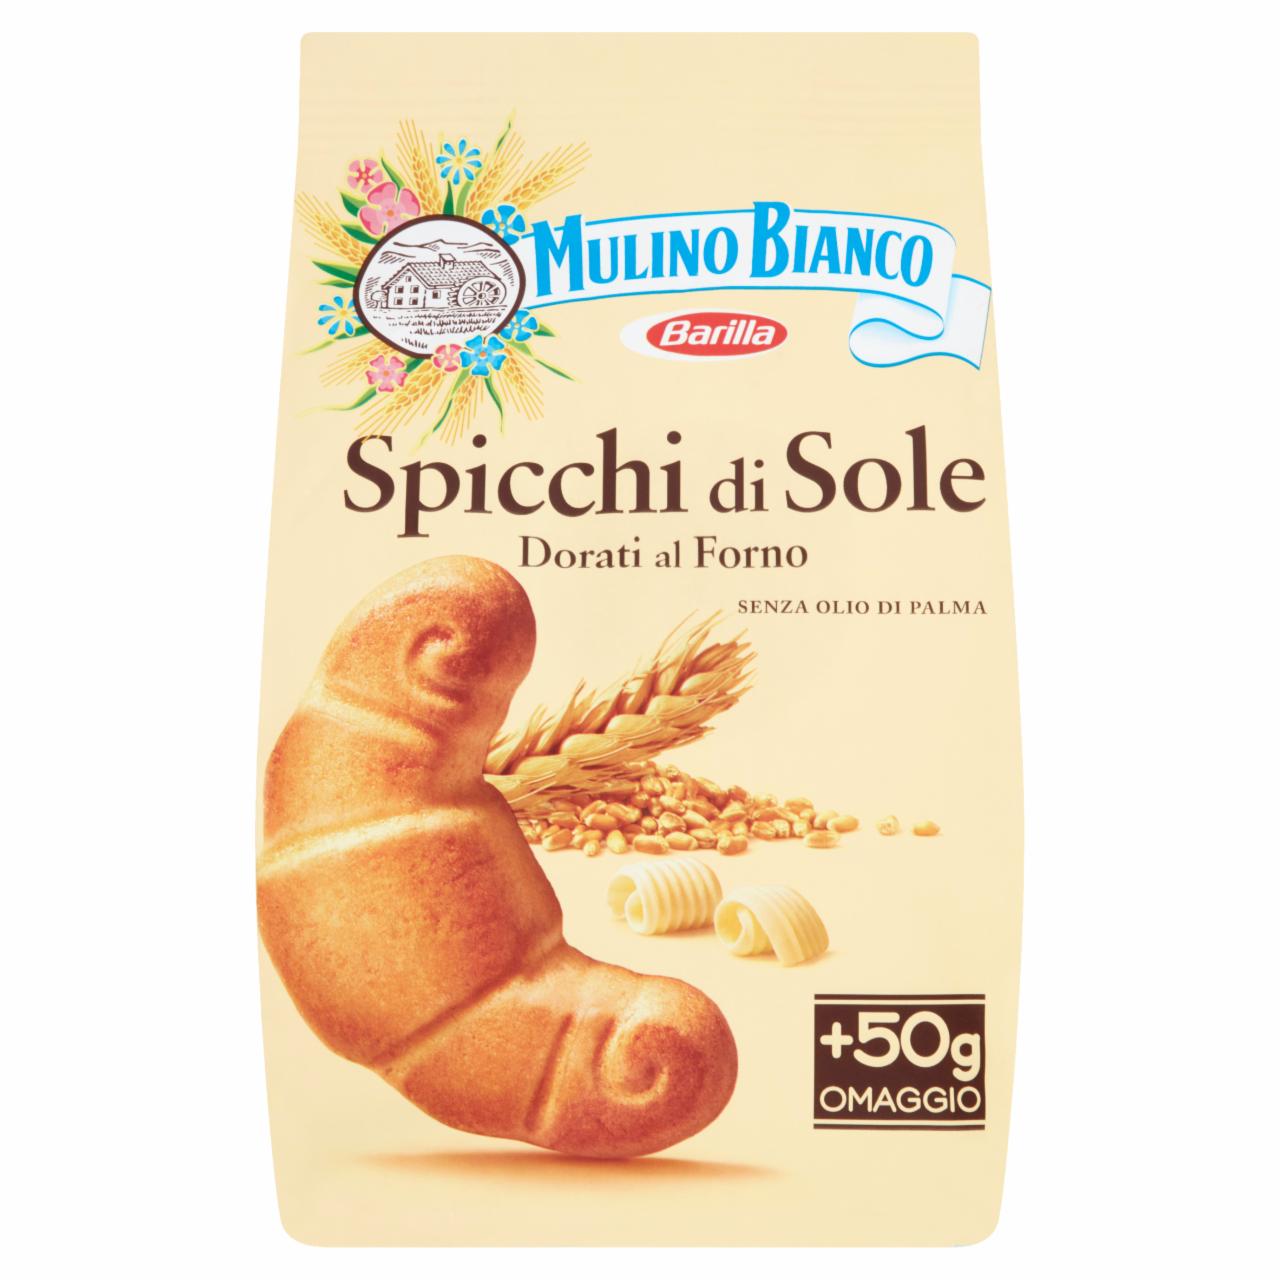 Képek - Mulino Bianco Spicchi di Sole vajas-tojásos omlós keksz 400 g